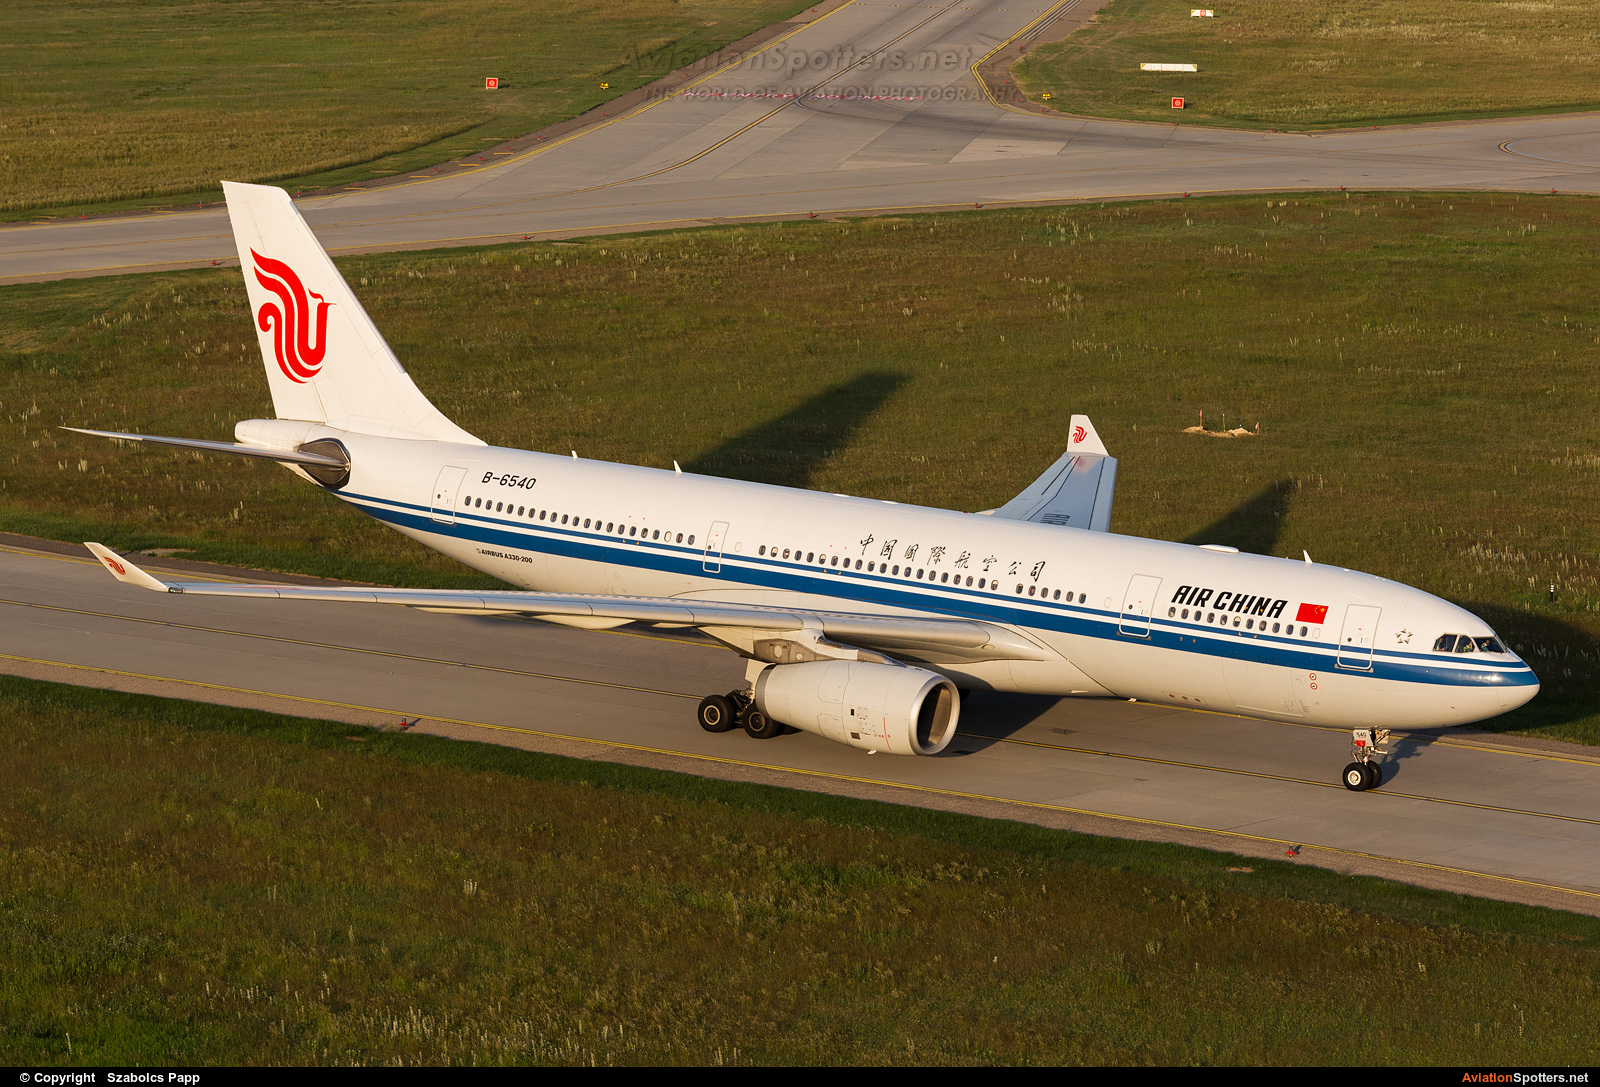 Air China  -  A330-200  (B-6540) By Szabolcs Papp (mr.szabi)